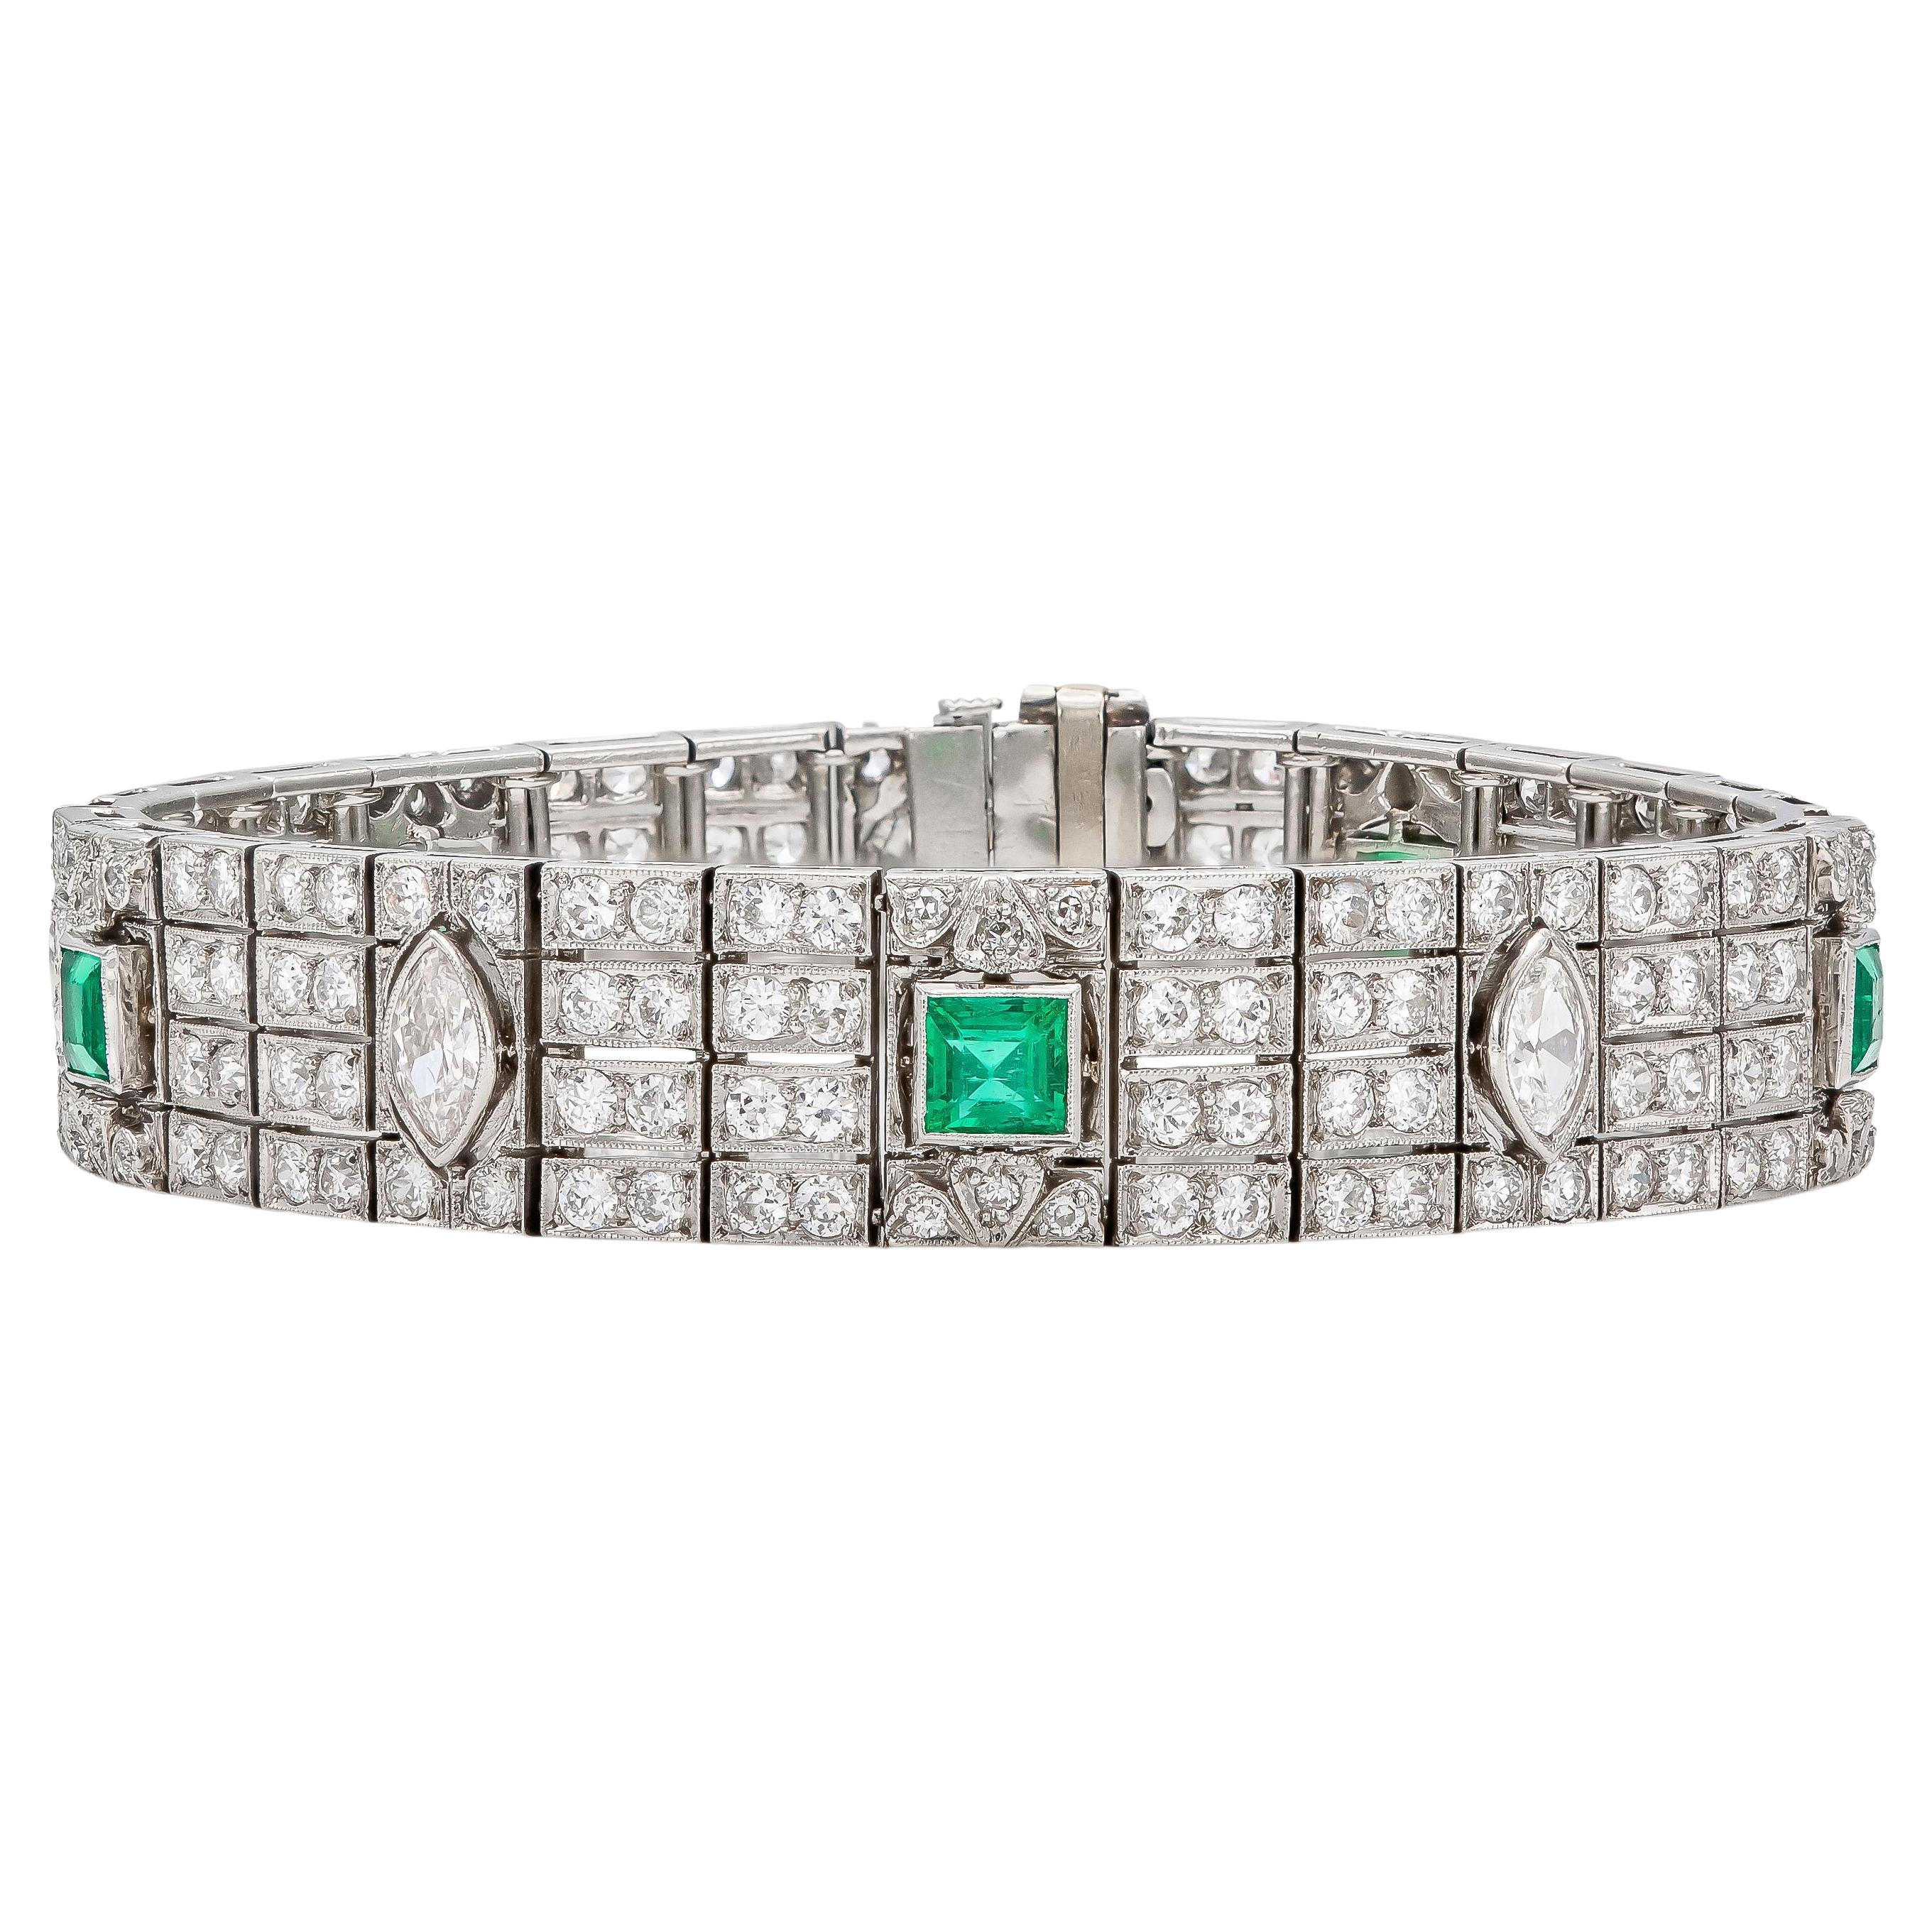 Antique Art Deco 1920s Diamond Bracelet with Emeralds